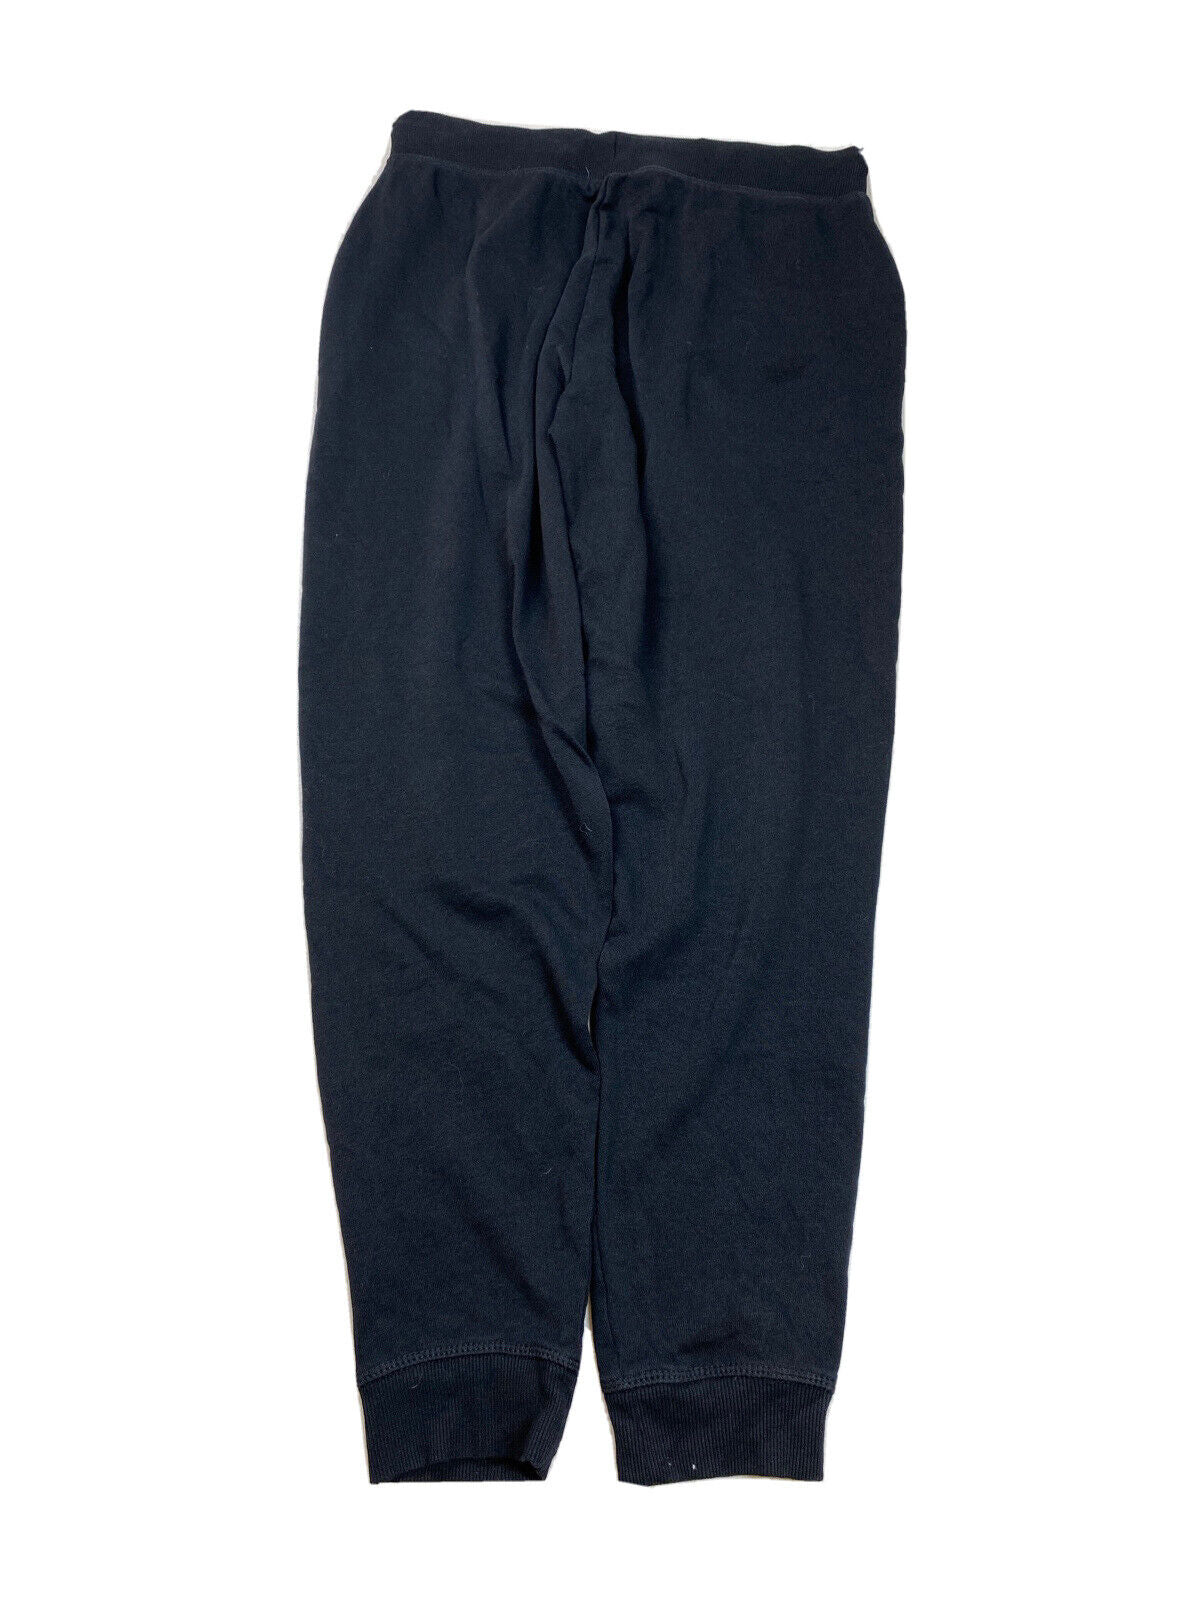 Calvin Klein Women's Black Sleepwear Jogger Sweatpants - M